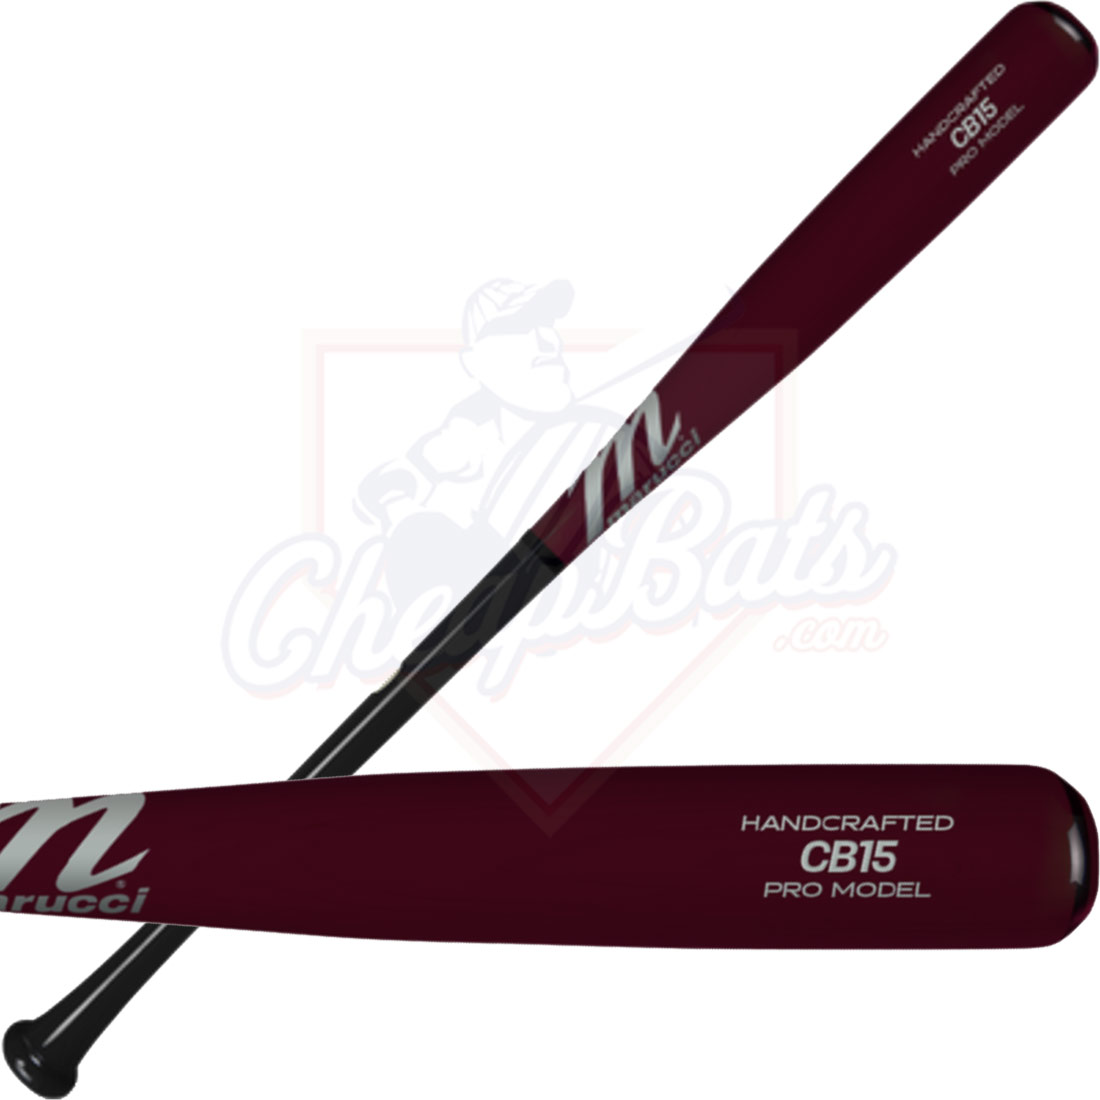 Marucci Carlos Beltran Pro Model Maple Wood Baseball Bat MVE2CB15-BK/CH